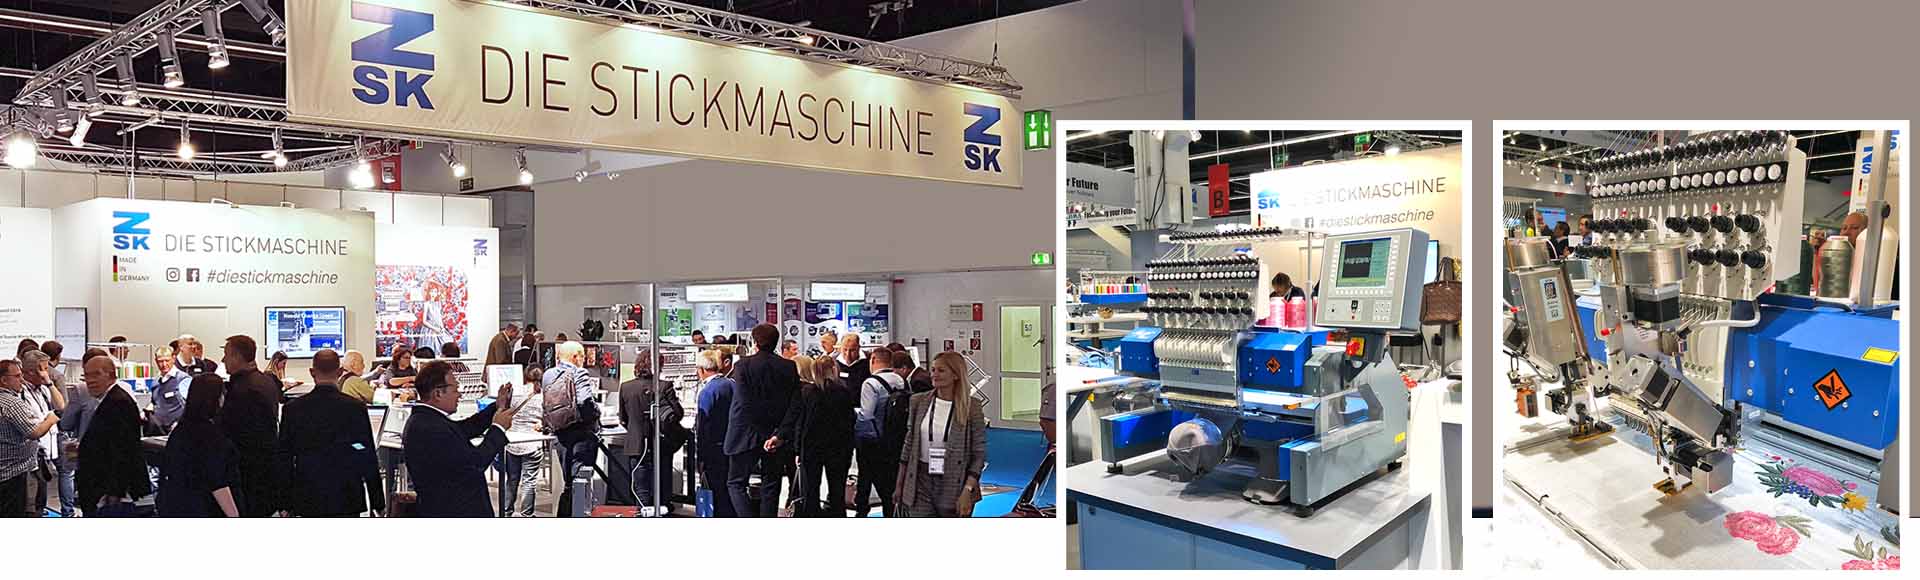 ZSK STICKMASCHINEN exhibited at texprocess and techtextil 2019 at Frankfurt am Main, Germany